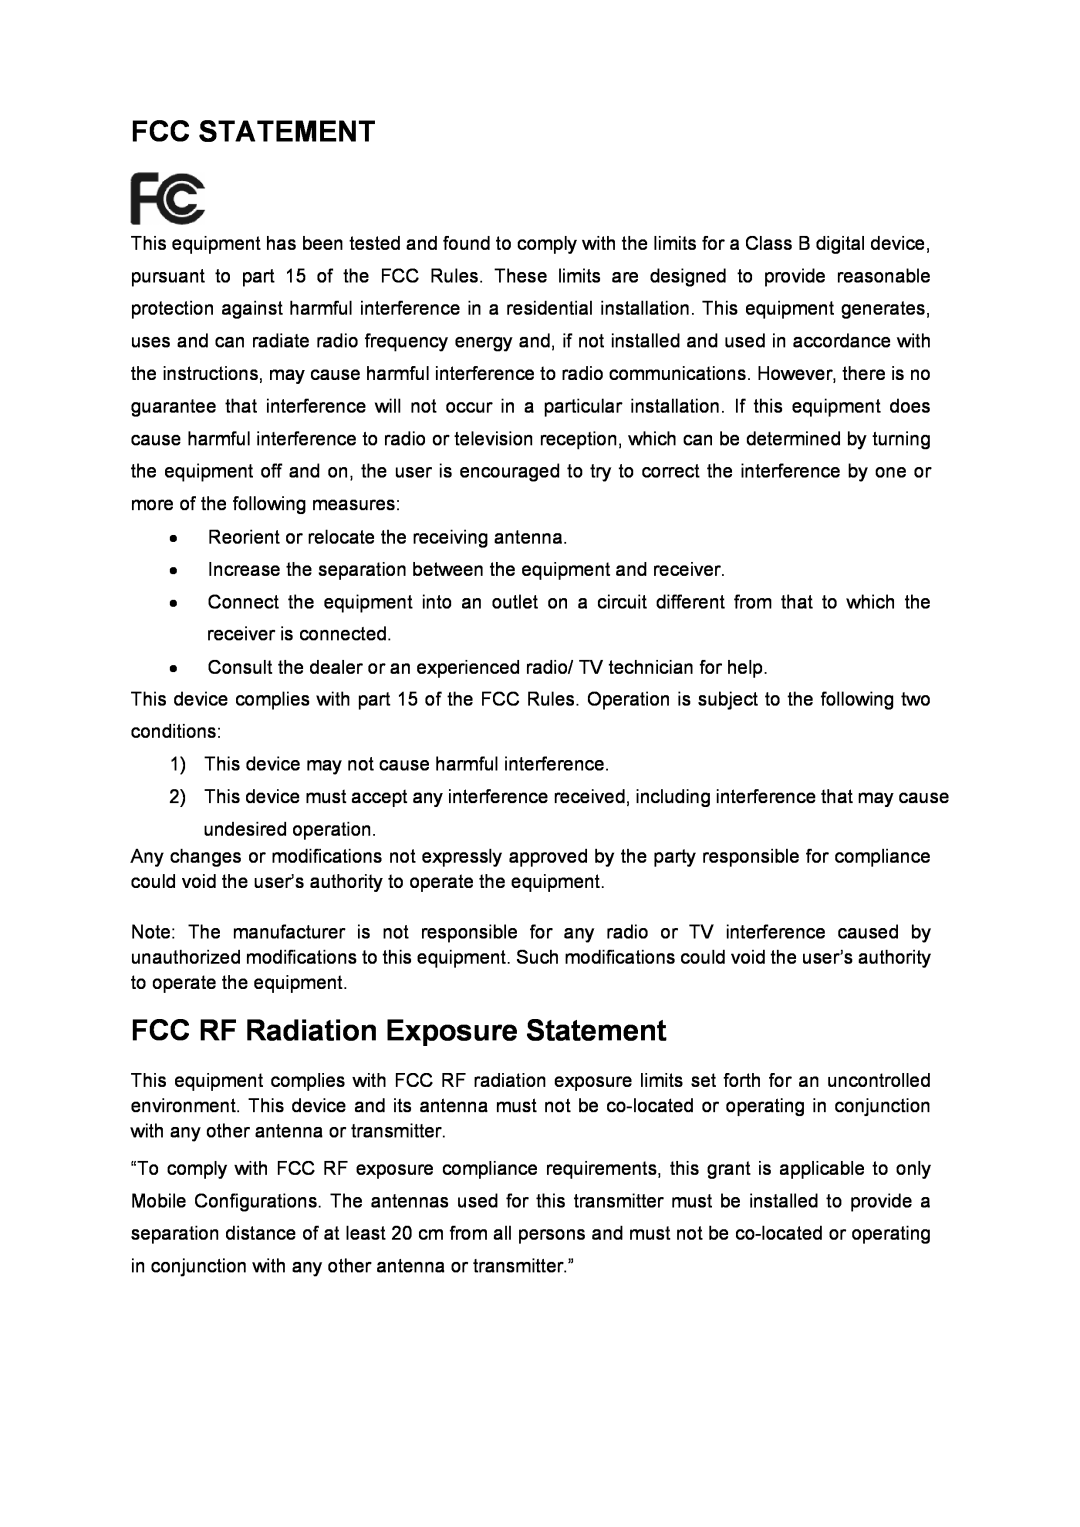 TP-Link TL-WN851ND manual Fcc Statement, FCC RF Radiation Exposure Statement 